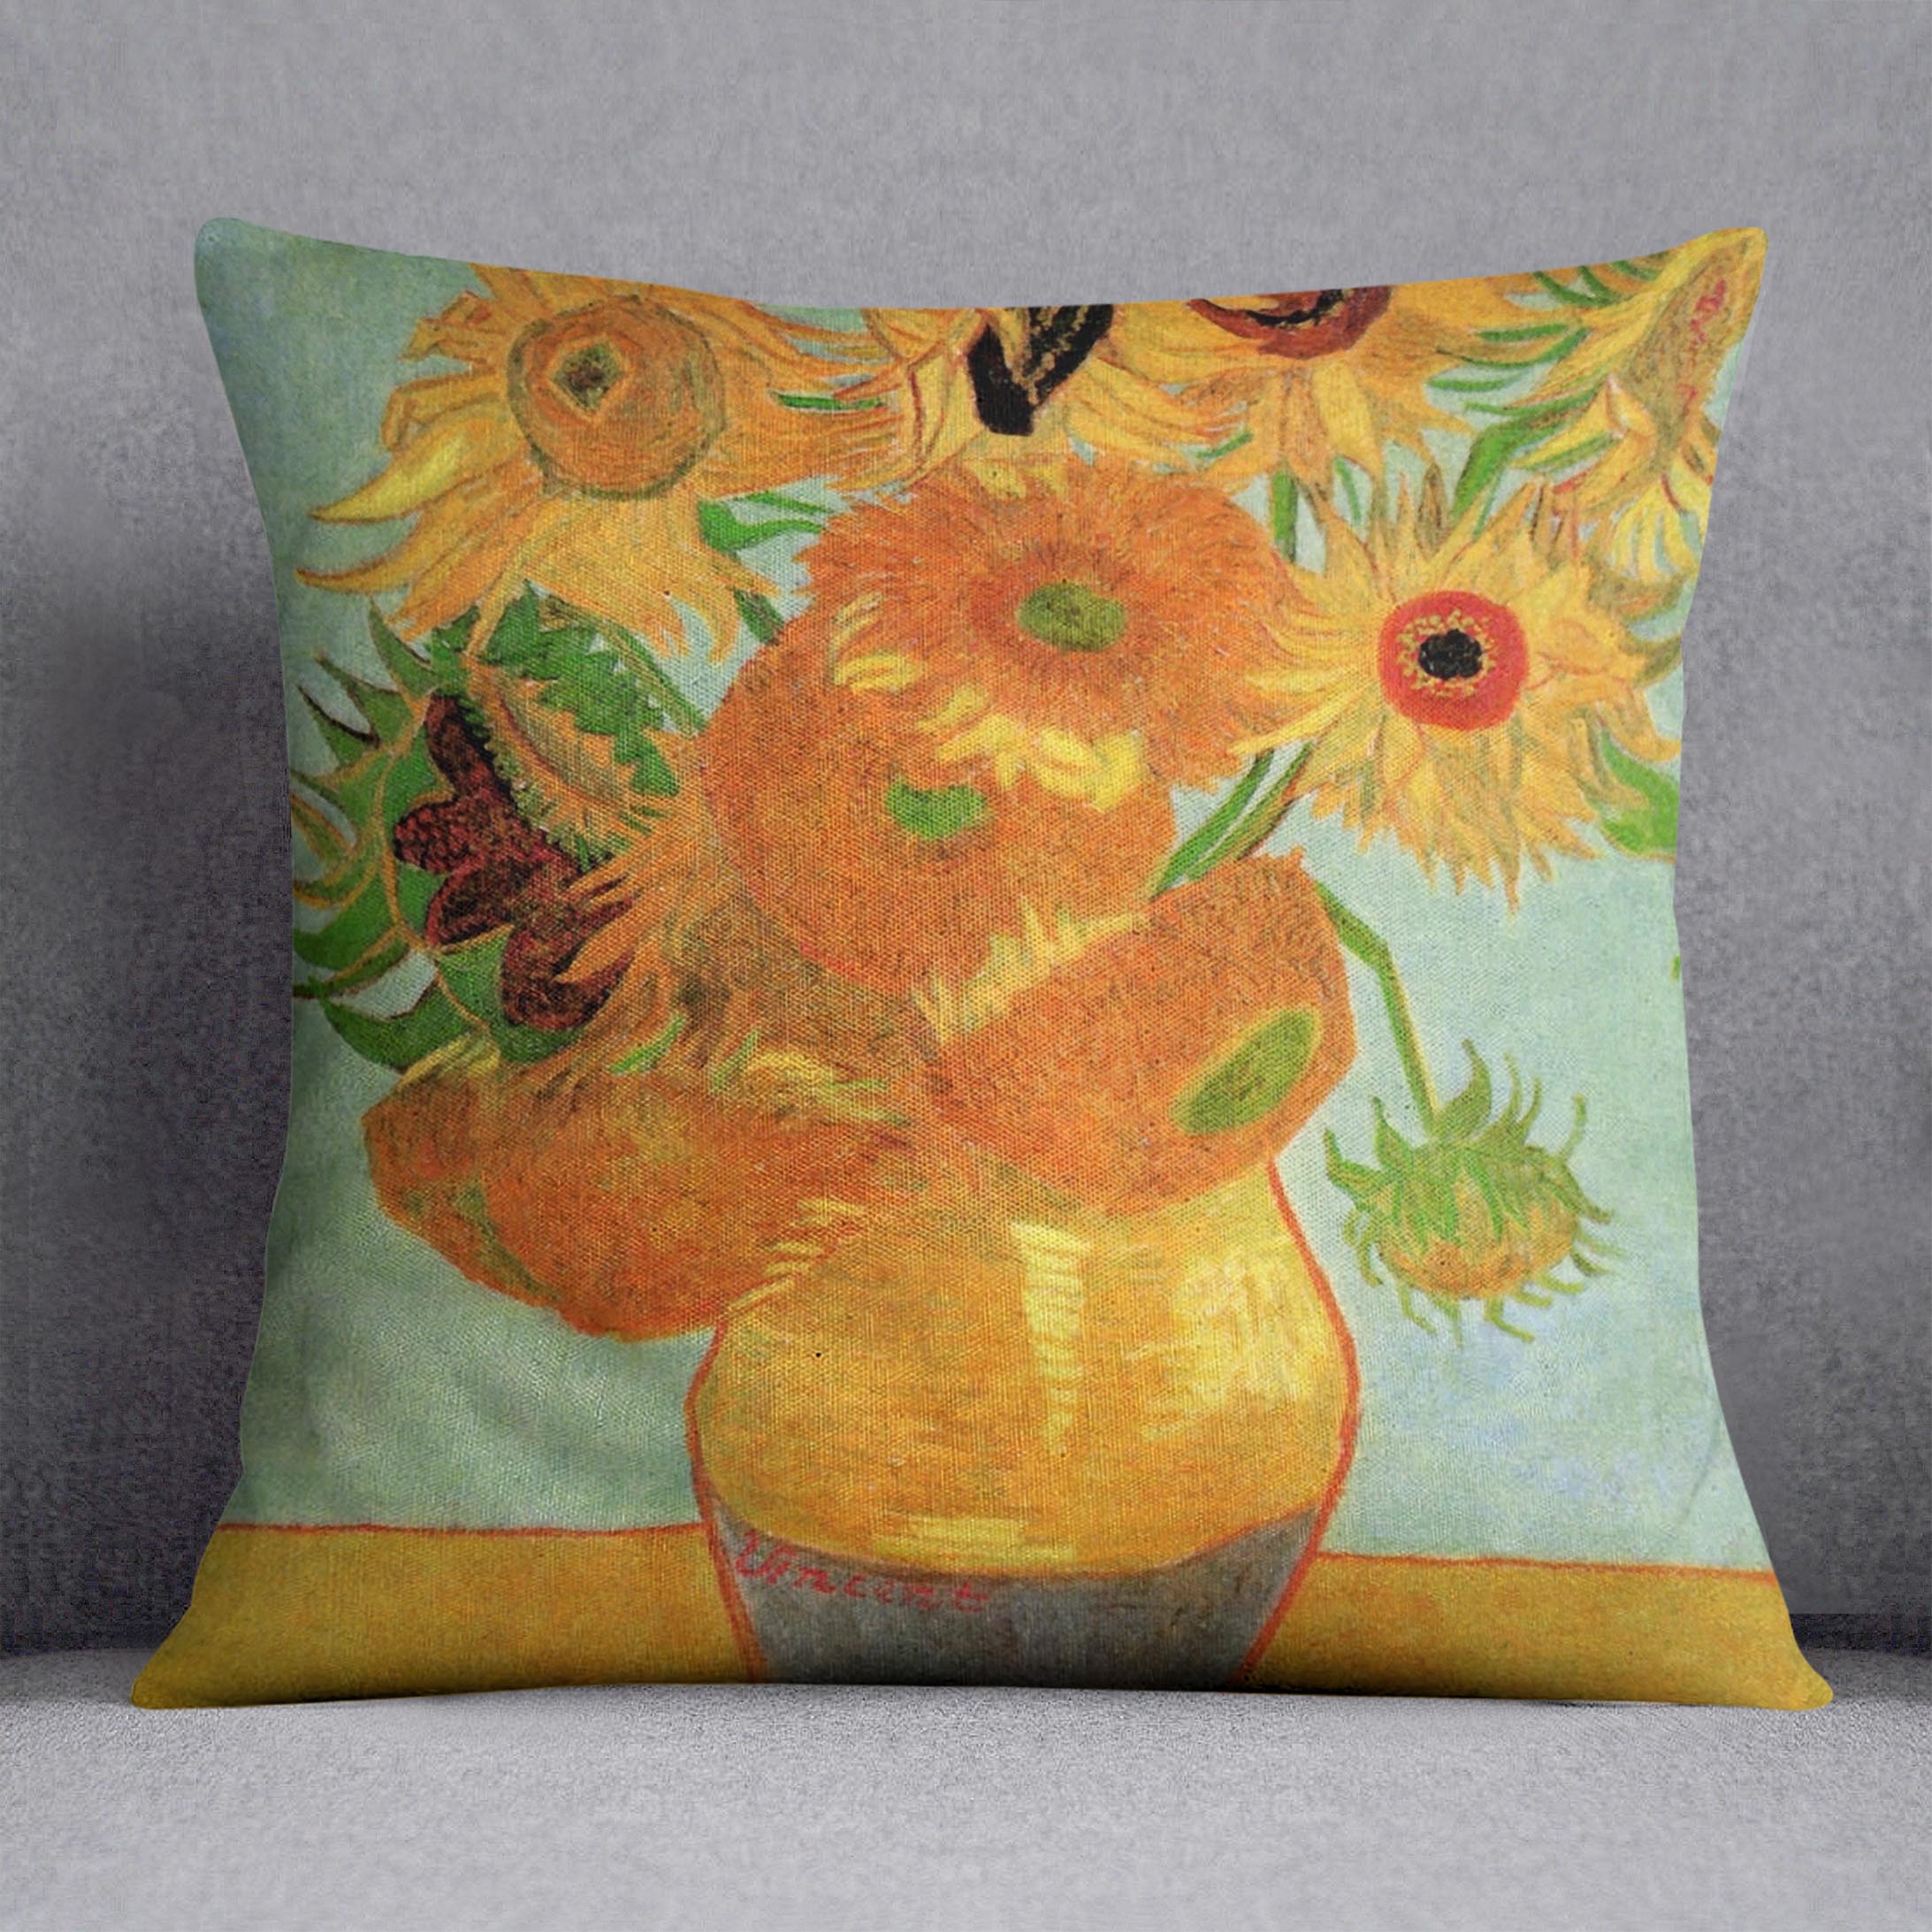 Still Life Vase with Twelve Sunflowers by Van Gogh Cushion